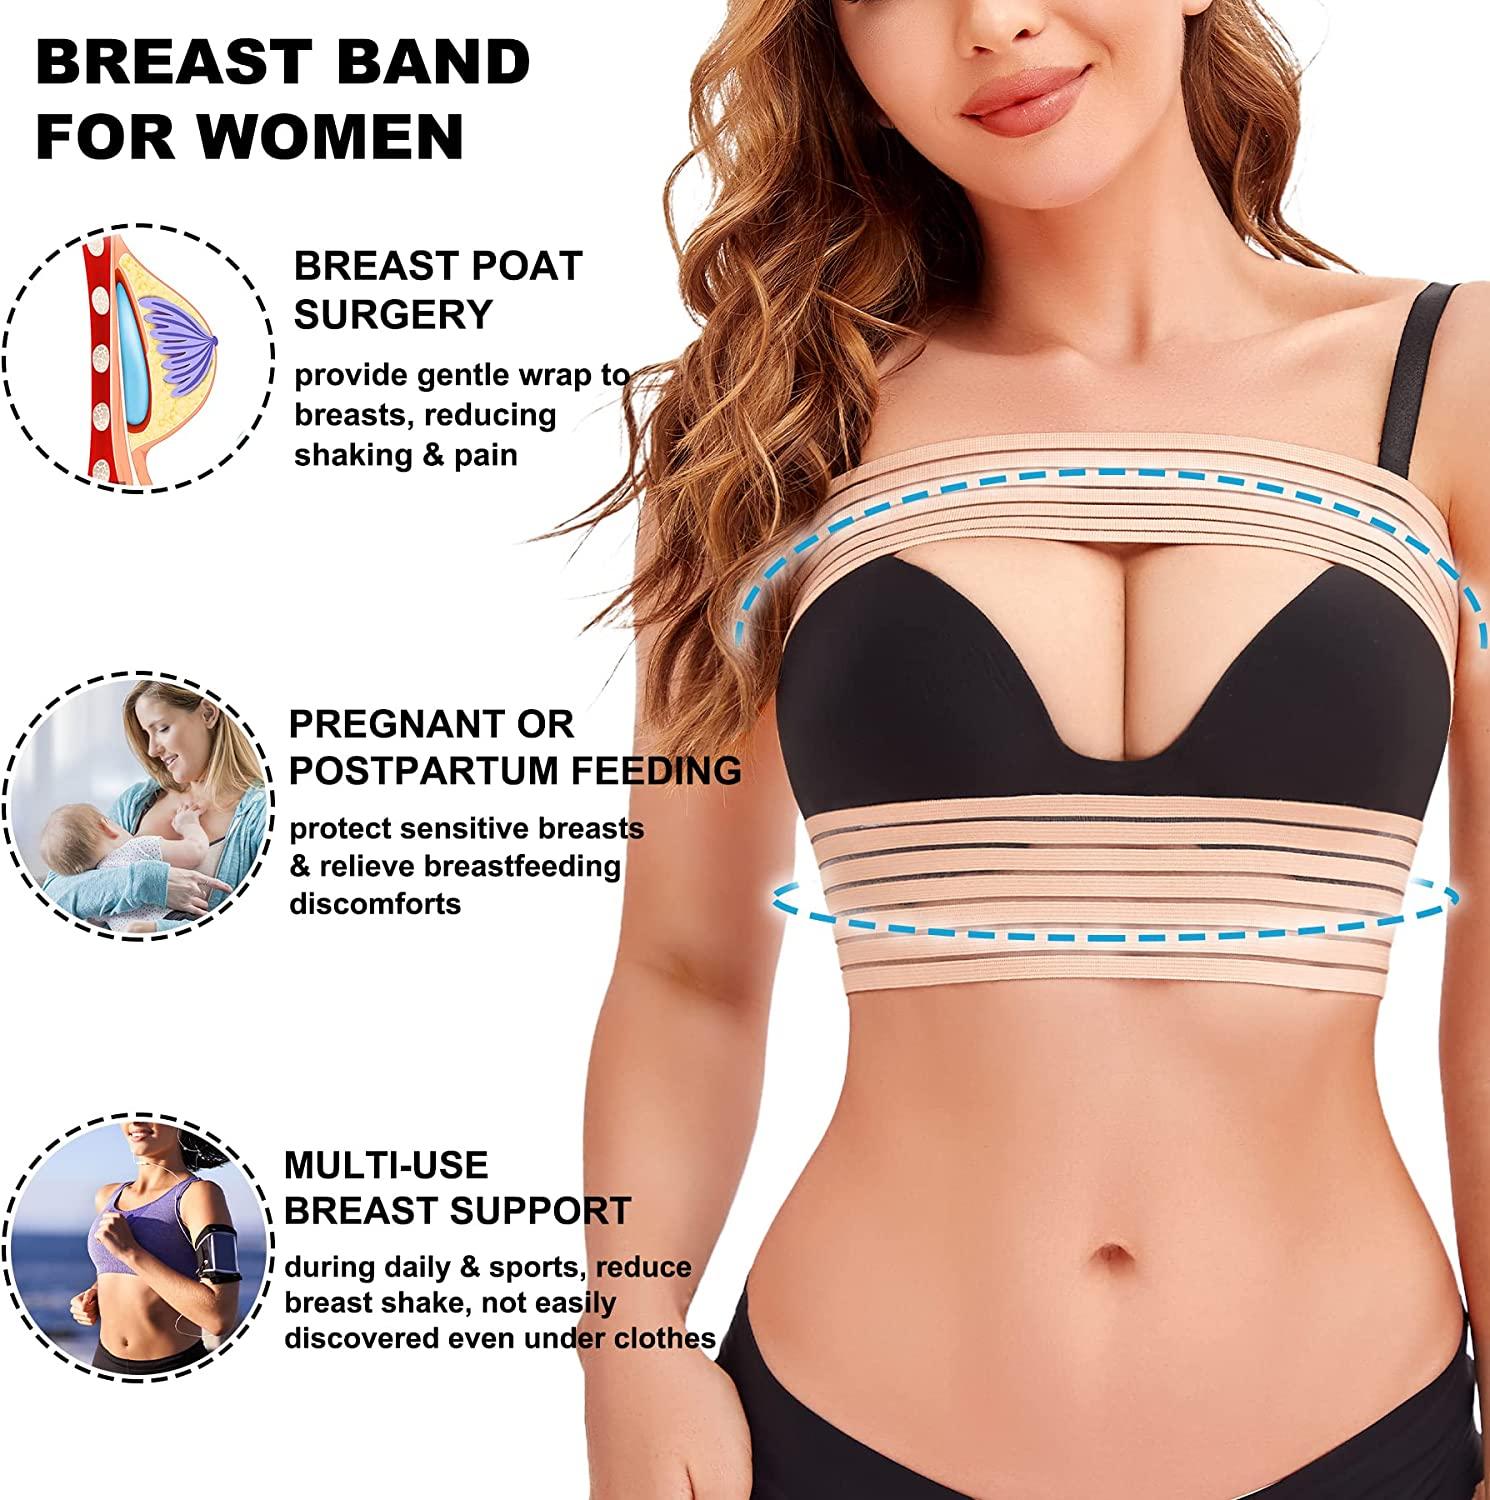 Post-op bra after breast enlargement or reduction + Elastic stabilizer